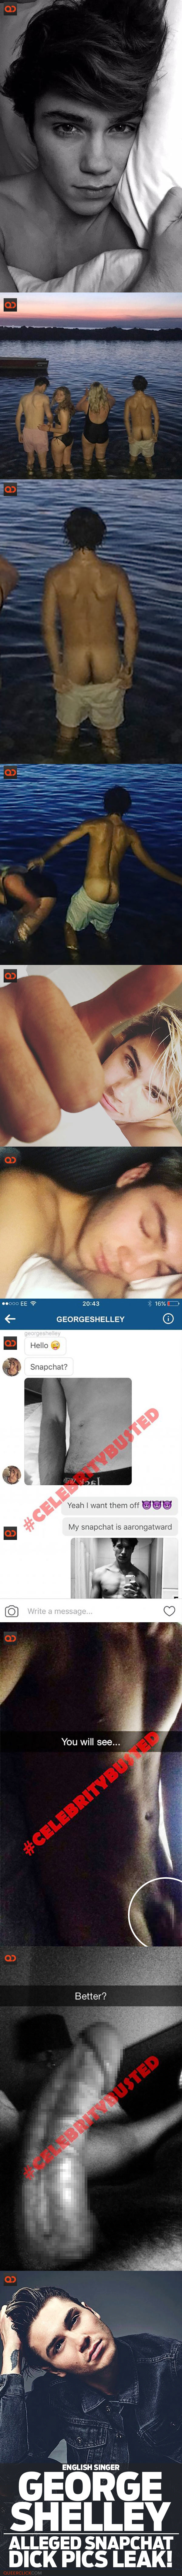 George Shelley, English Singer, Alleged Snapchat Dick Pics Leak!